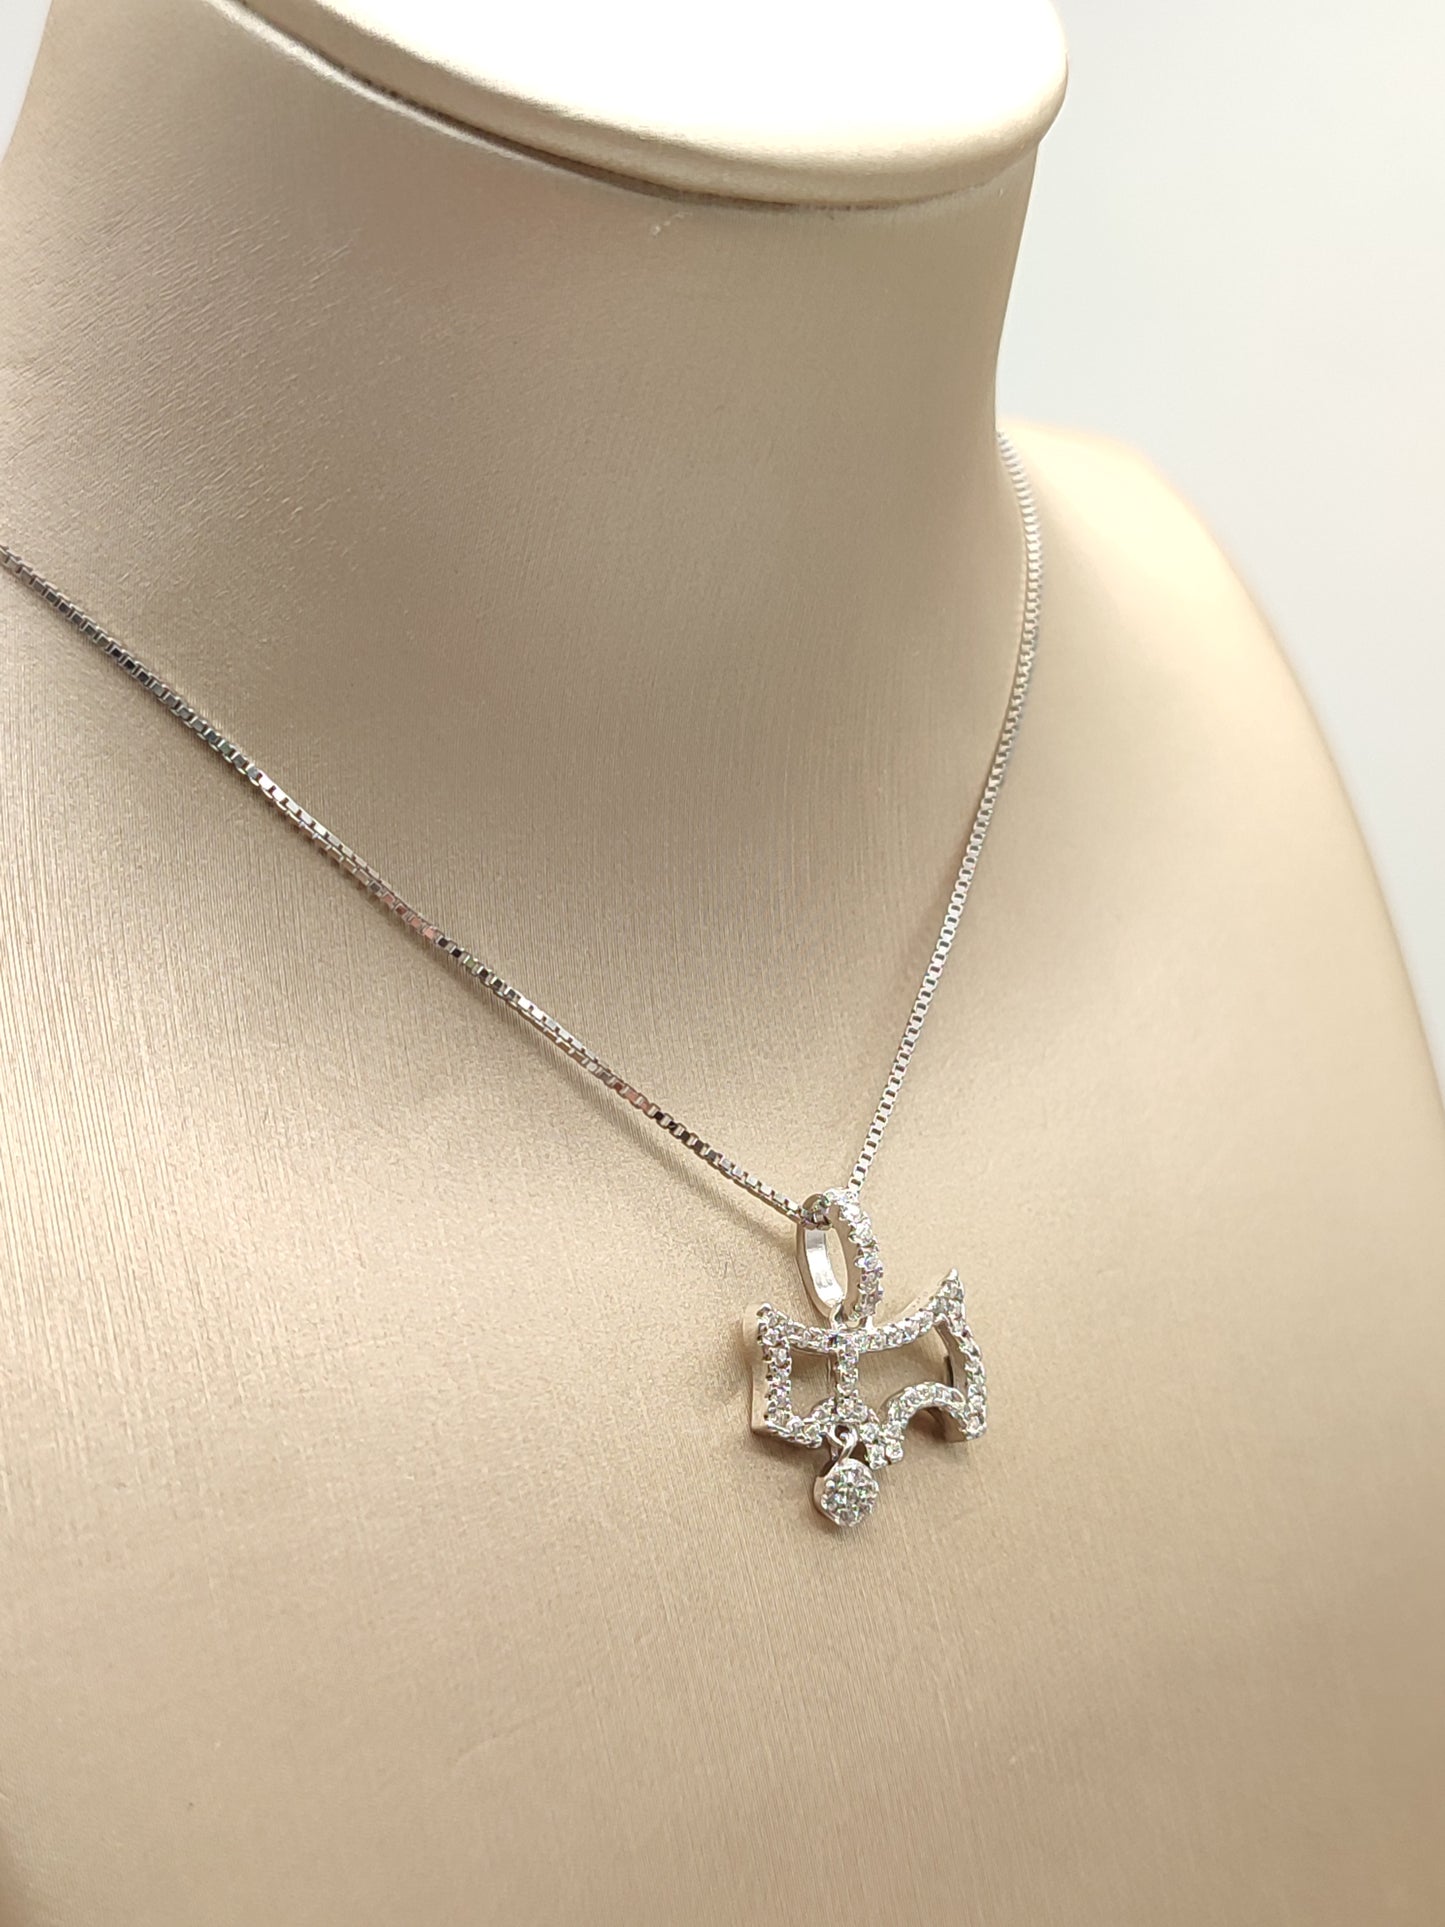 Silver necklace with pavé dog